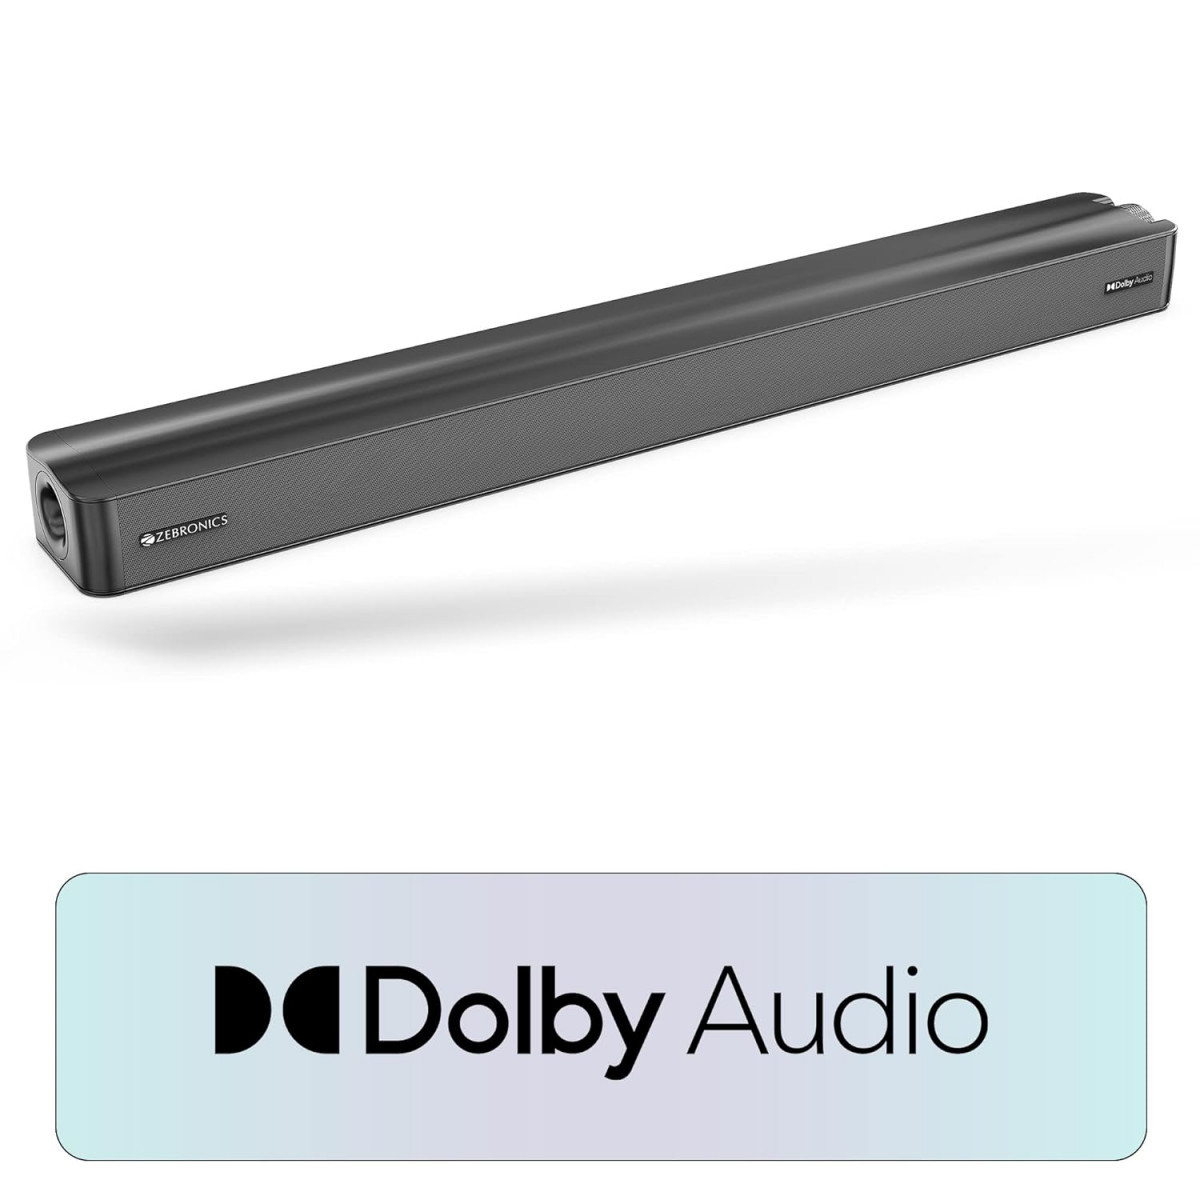 ZEBRONICS Juke BAR 3810 PRO Dolby Audio Soundbar with 100W RMS Output Premium Glossy Finish Powerful Quad Drives HDMI ARC Optical Bluetooth 50 LED Display Wall Mount and Remote